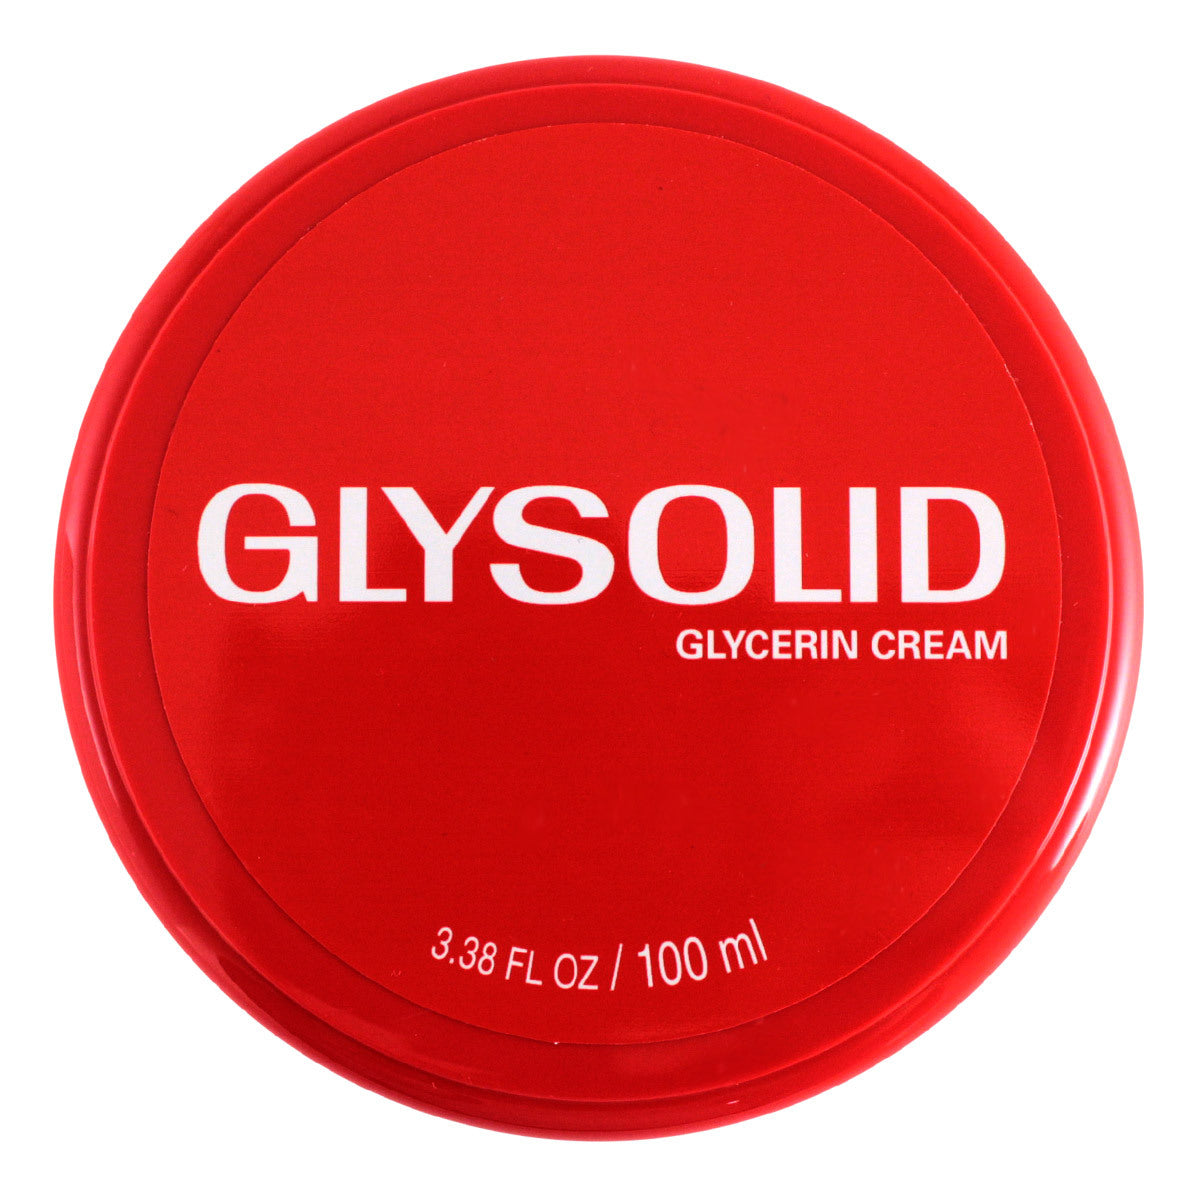 Primary image of Glycerin Cream